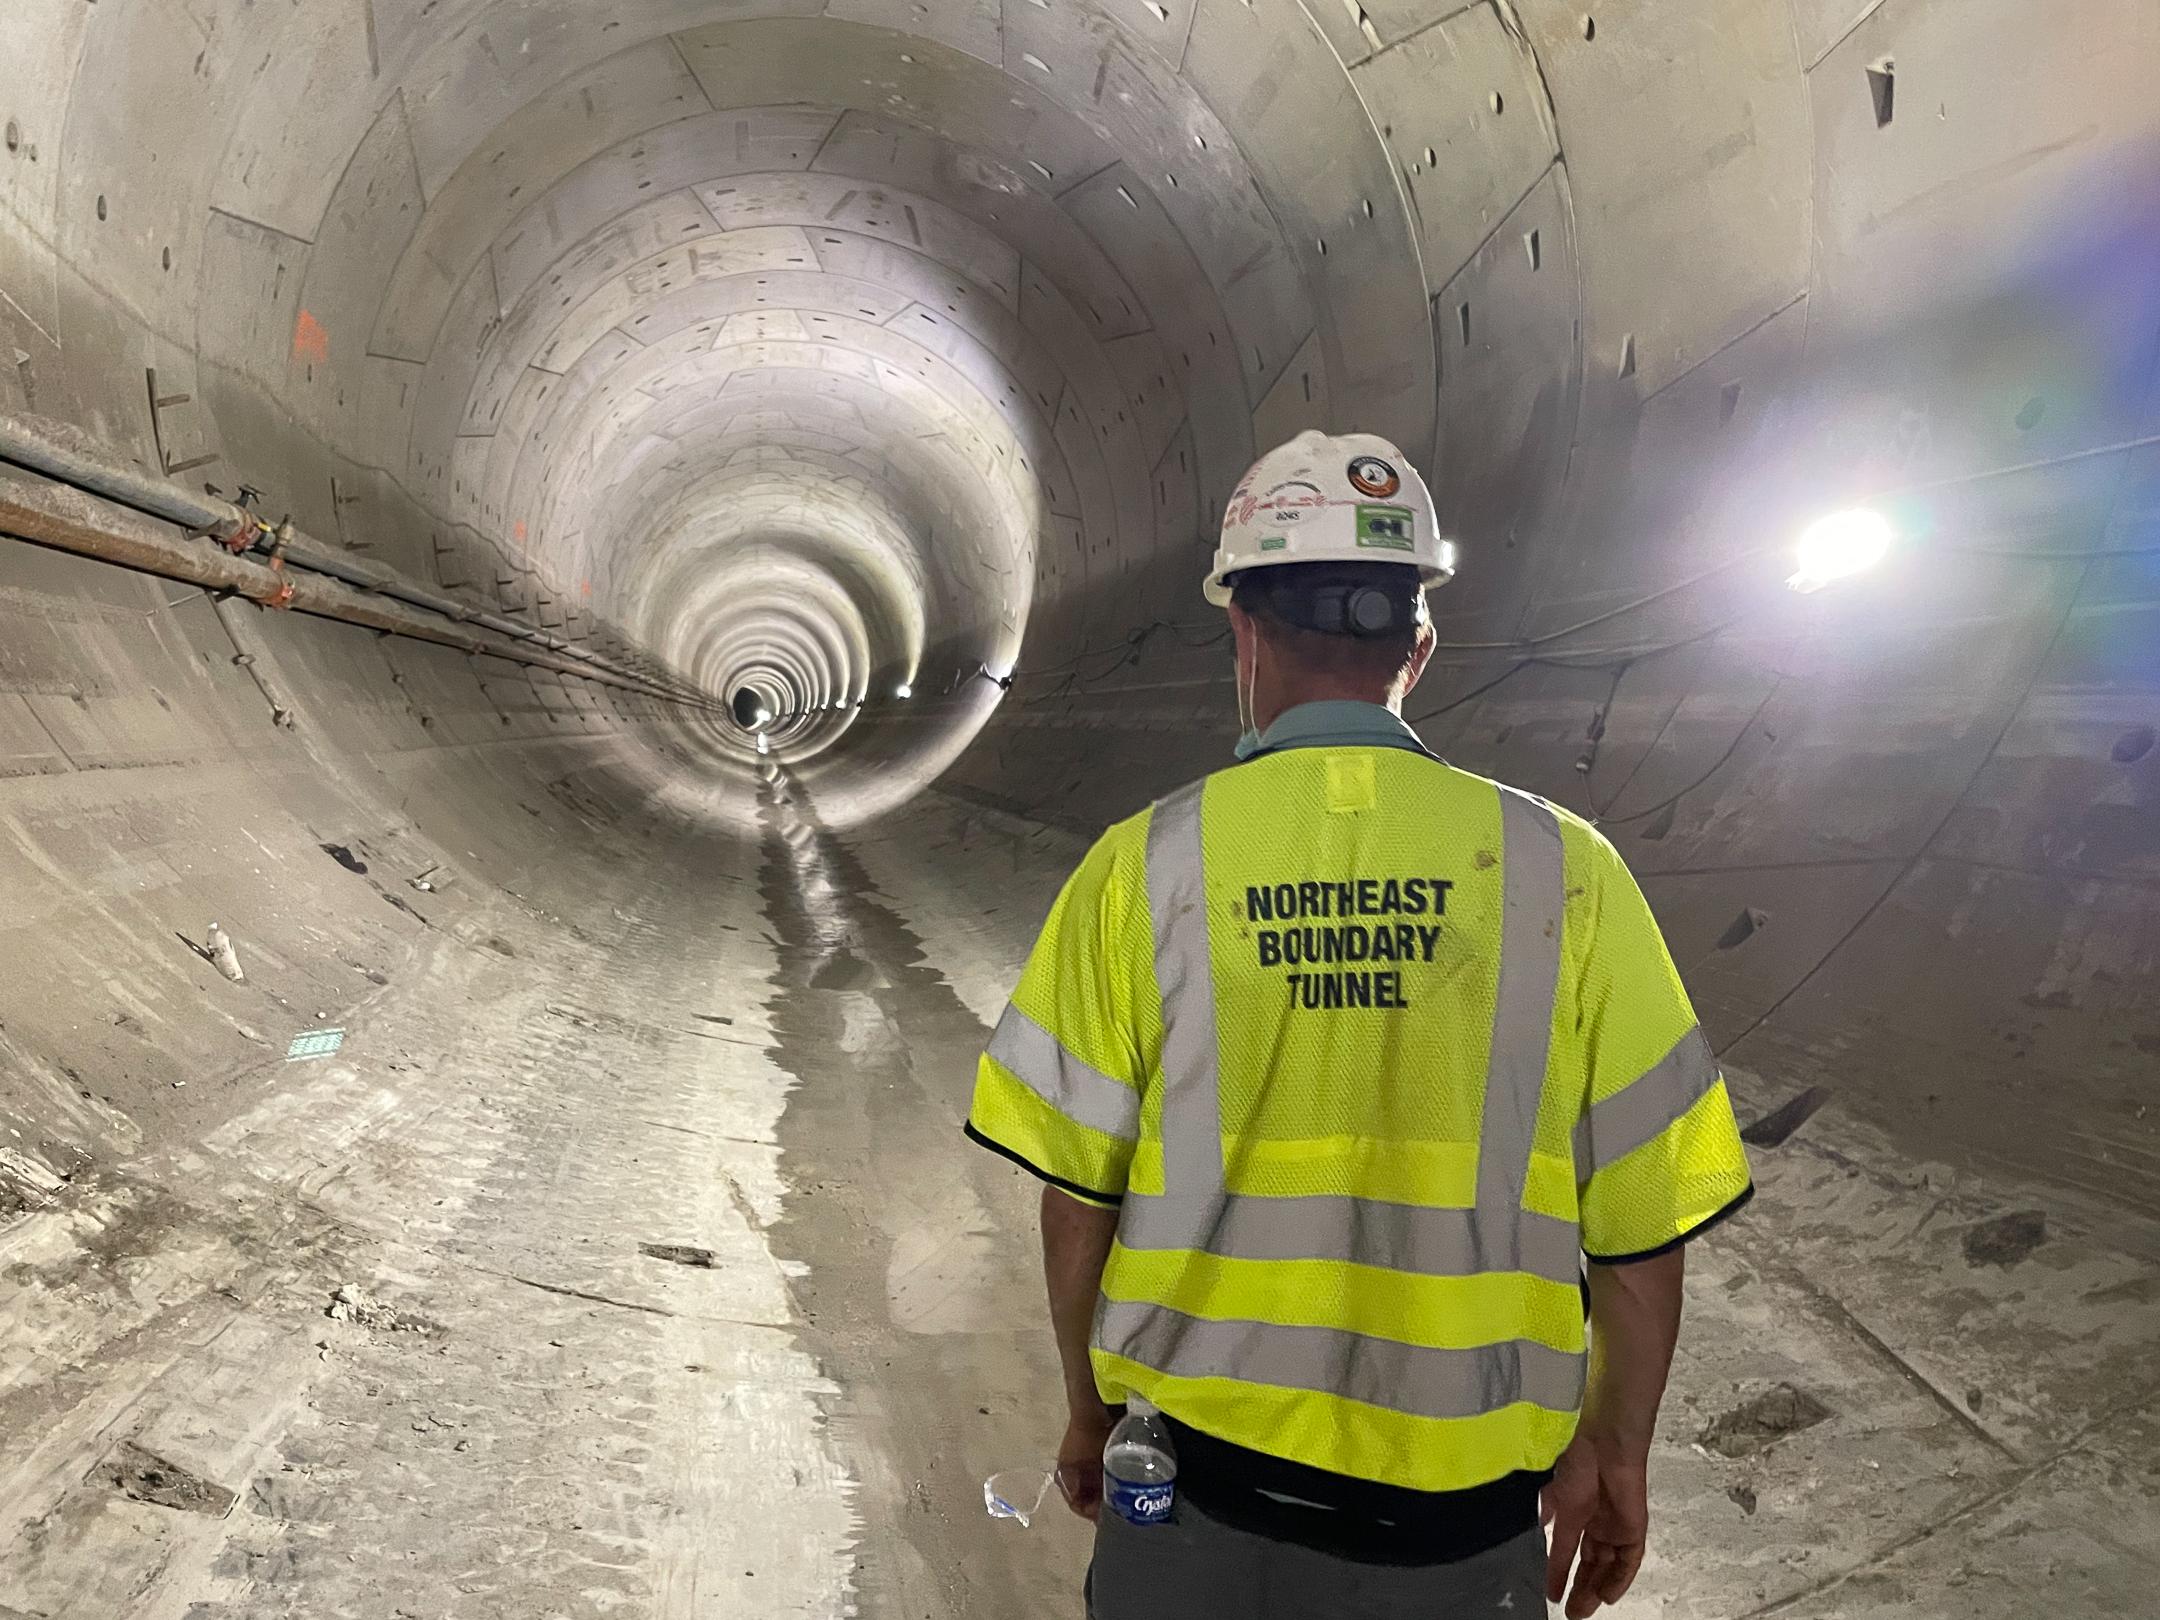 Northeast Boundary Tunnel (NEBT), USA